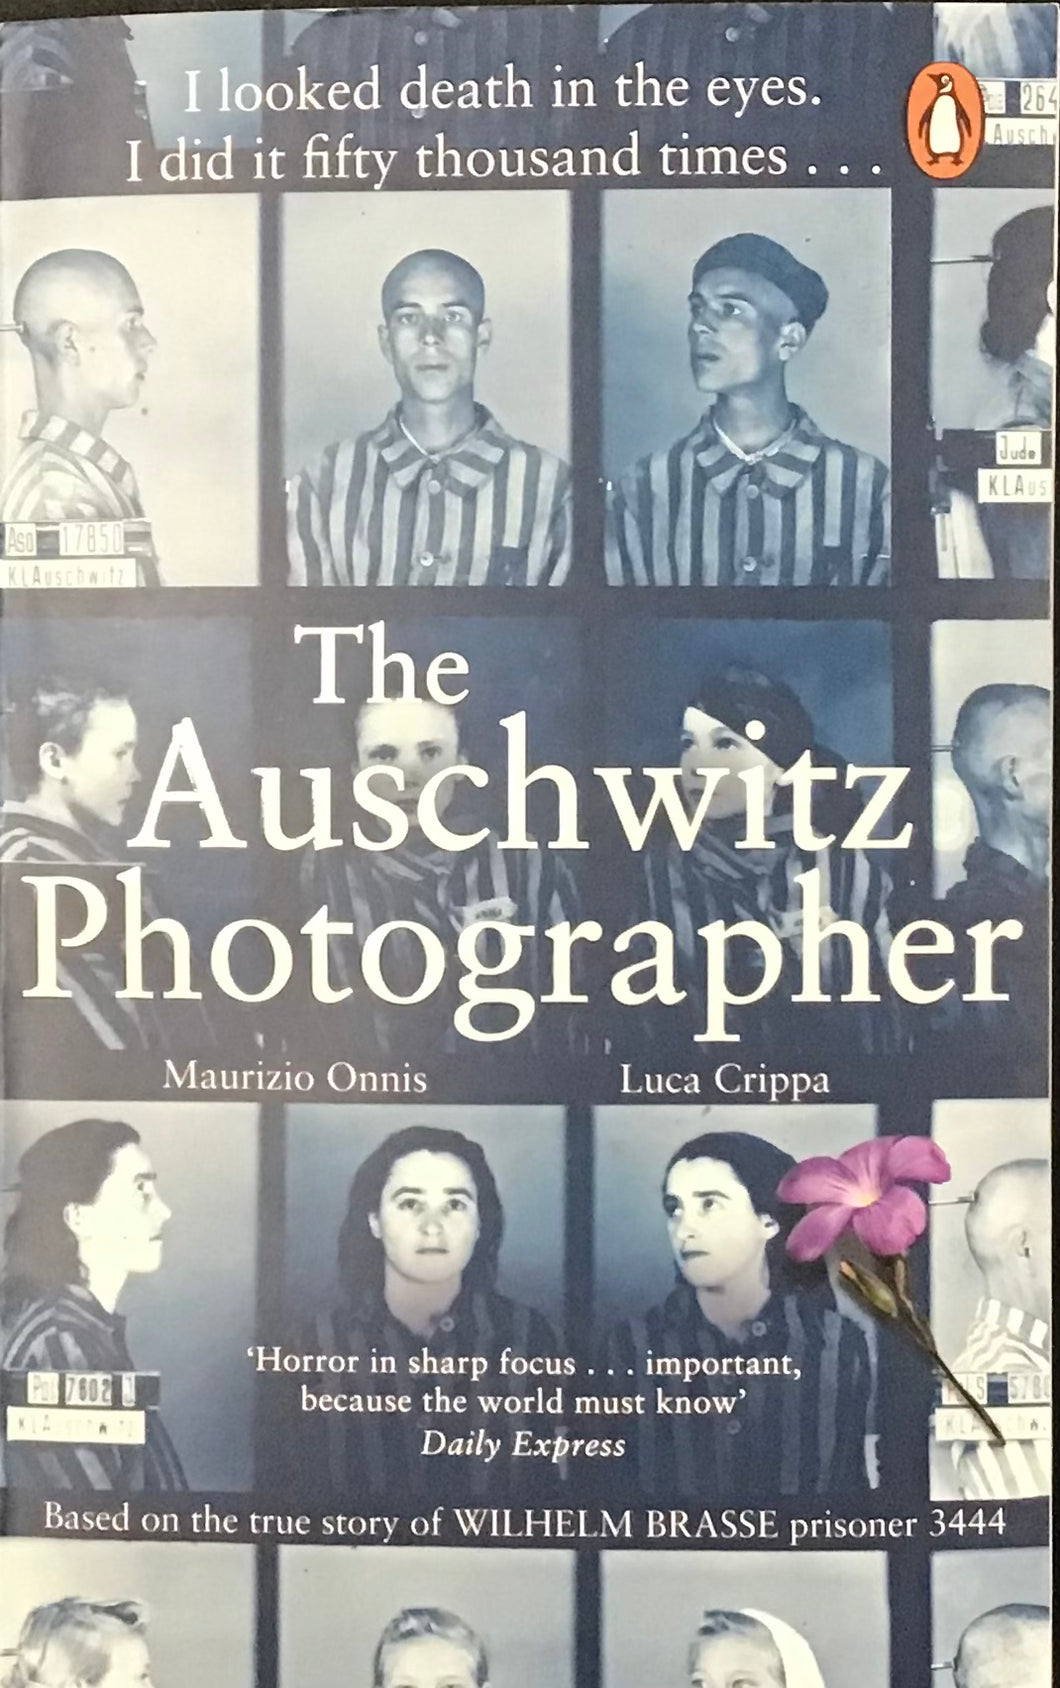 The Auschwitz Photographer, Maurizio Onnis & Luca Crippa